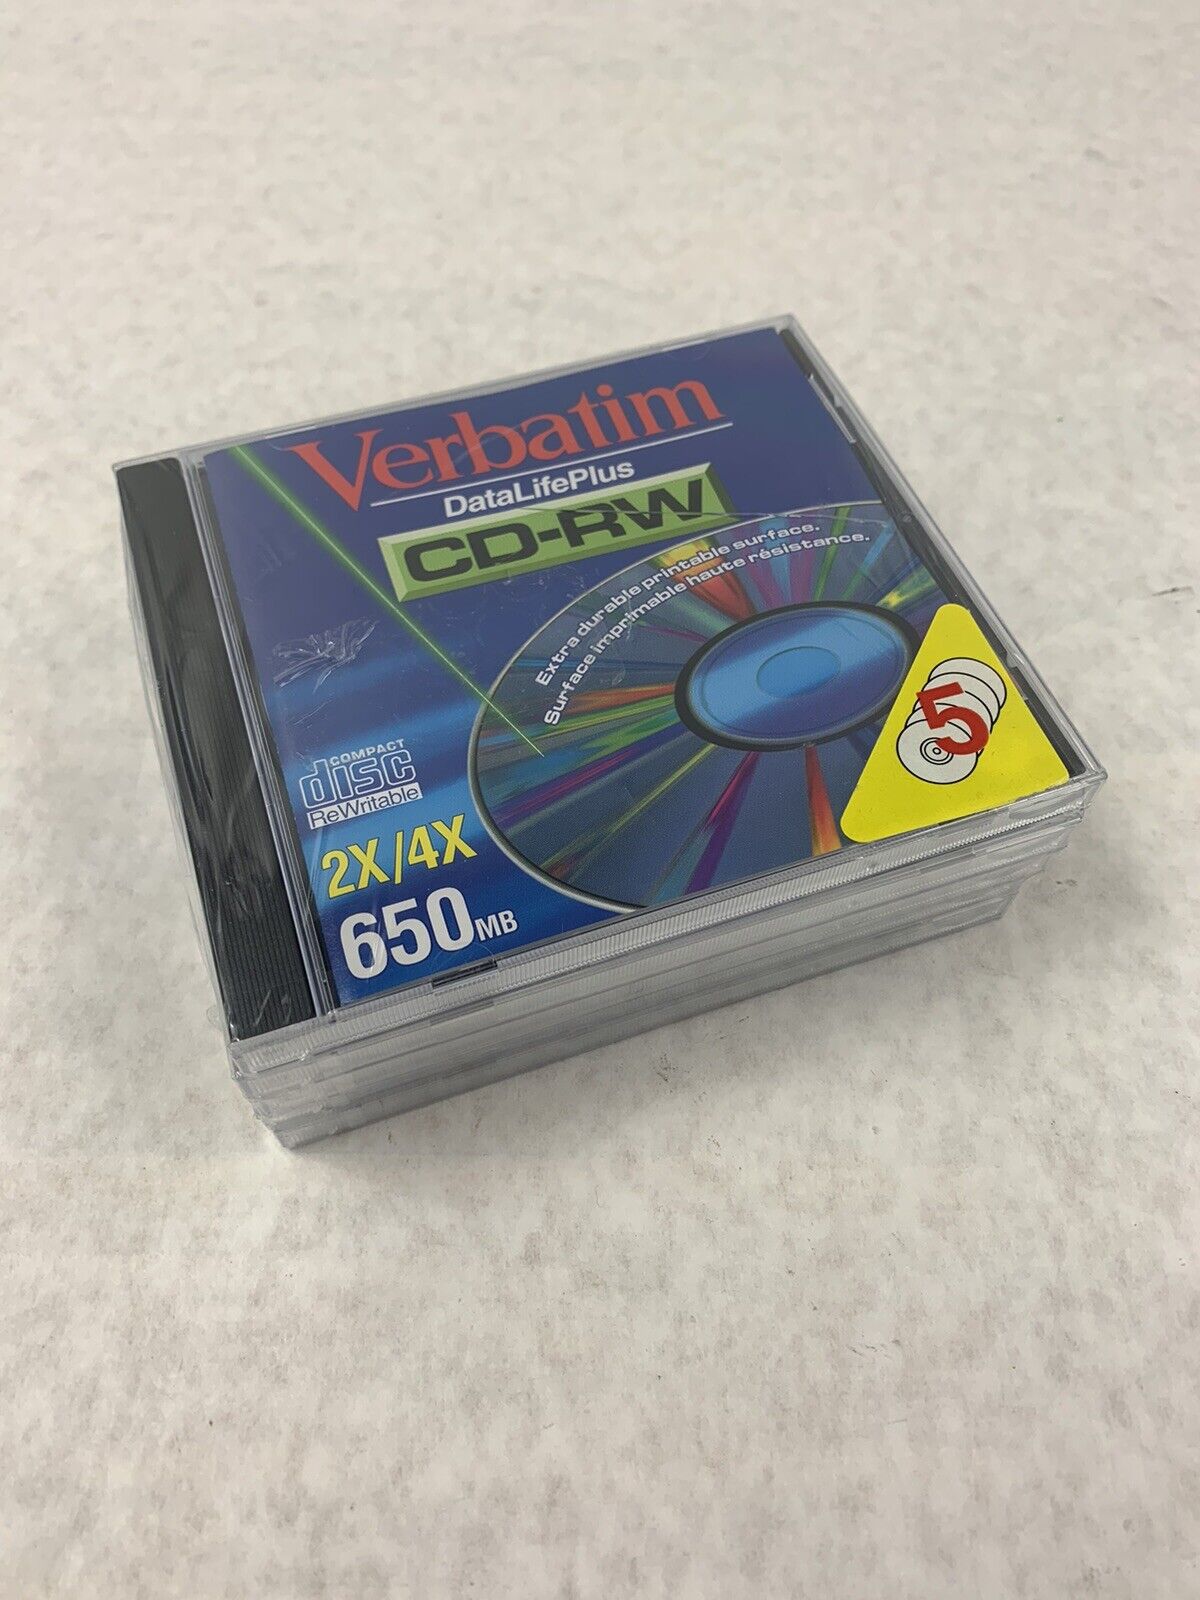 5 Pack Verbatim DataLifePlus CD-RW Recordable Disk 2x-4x Speed 650MB